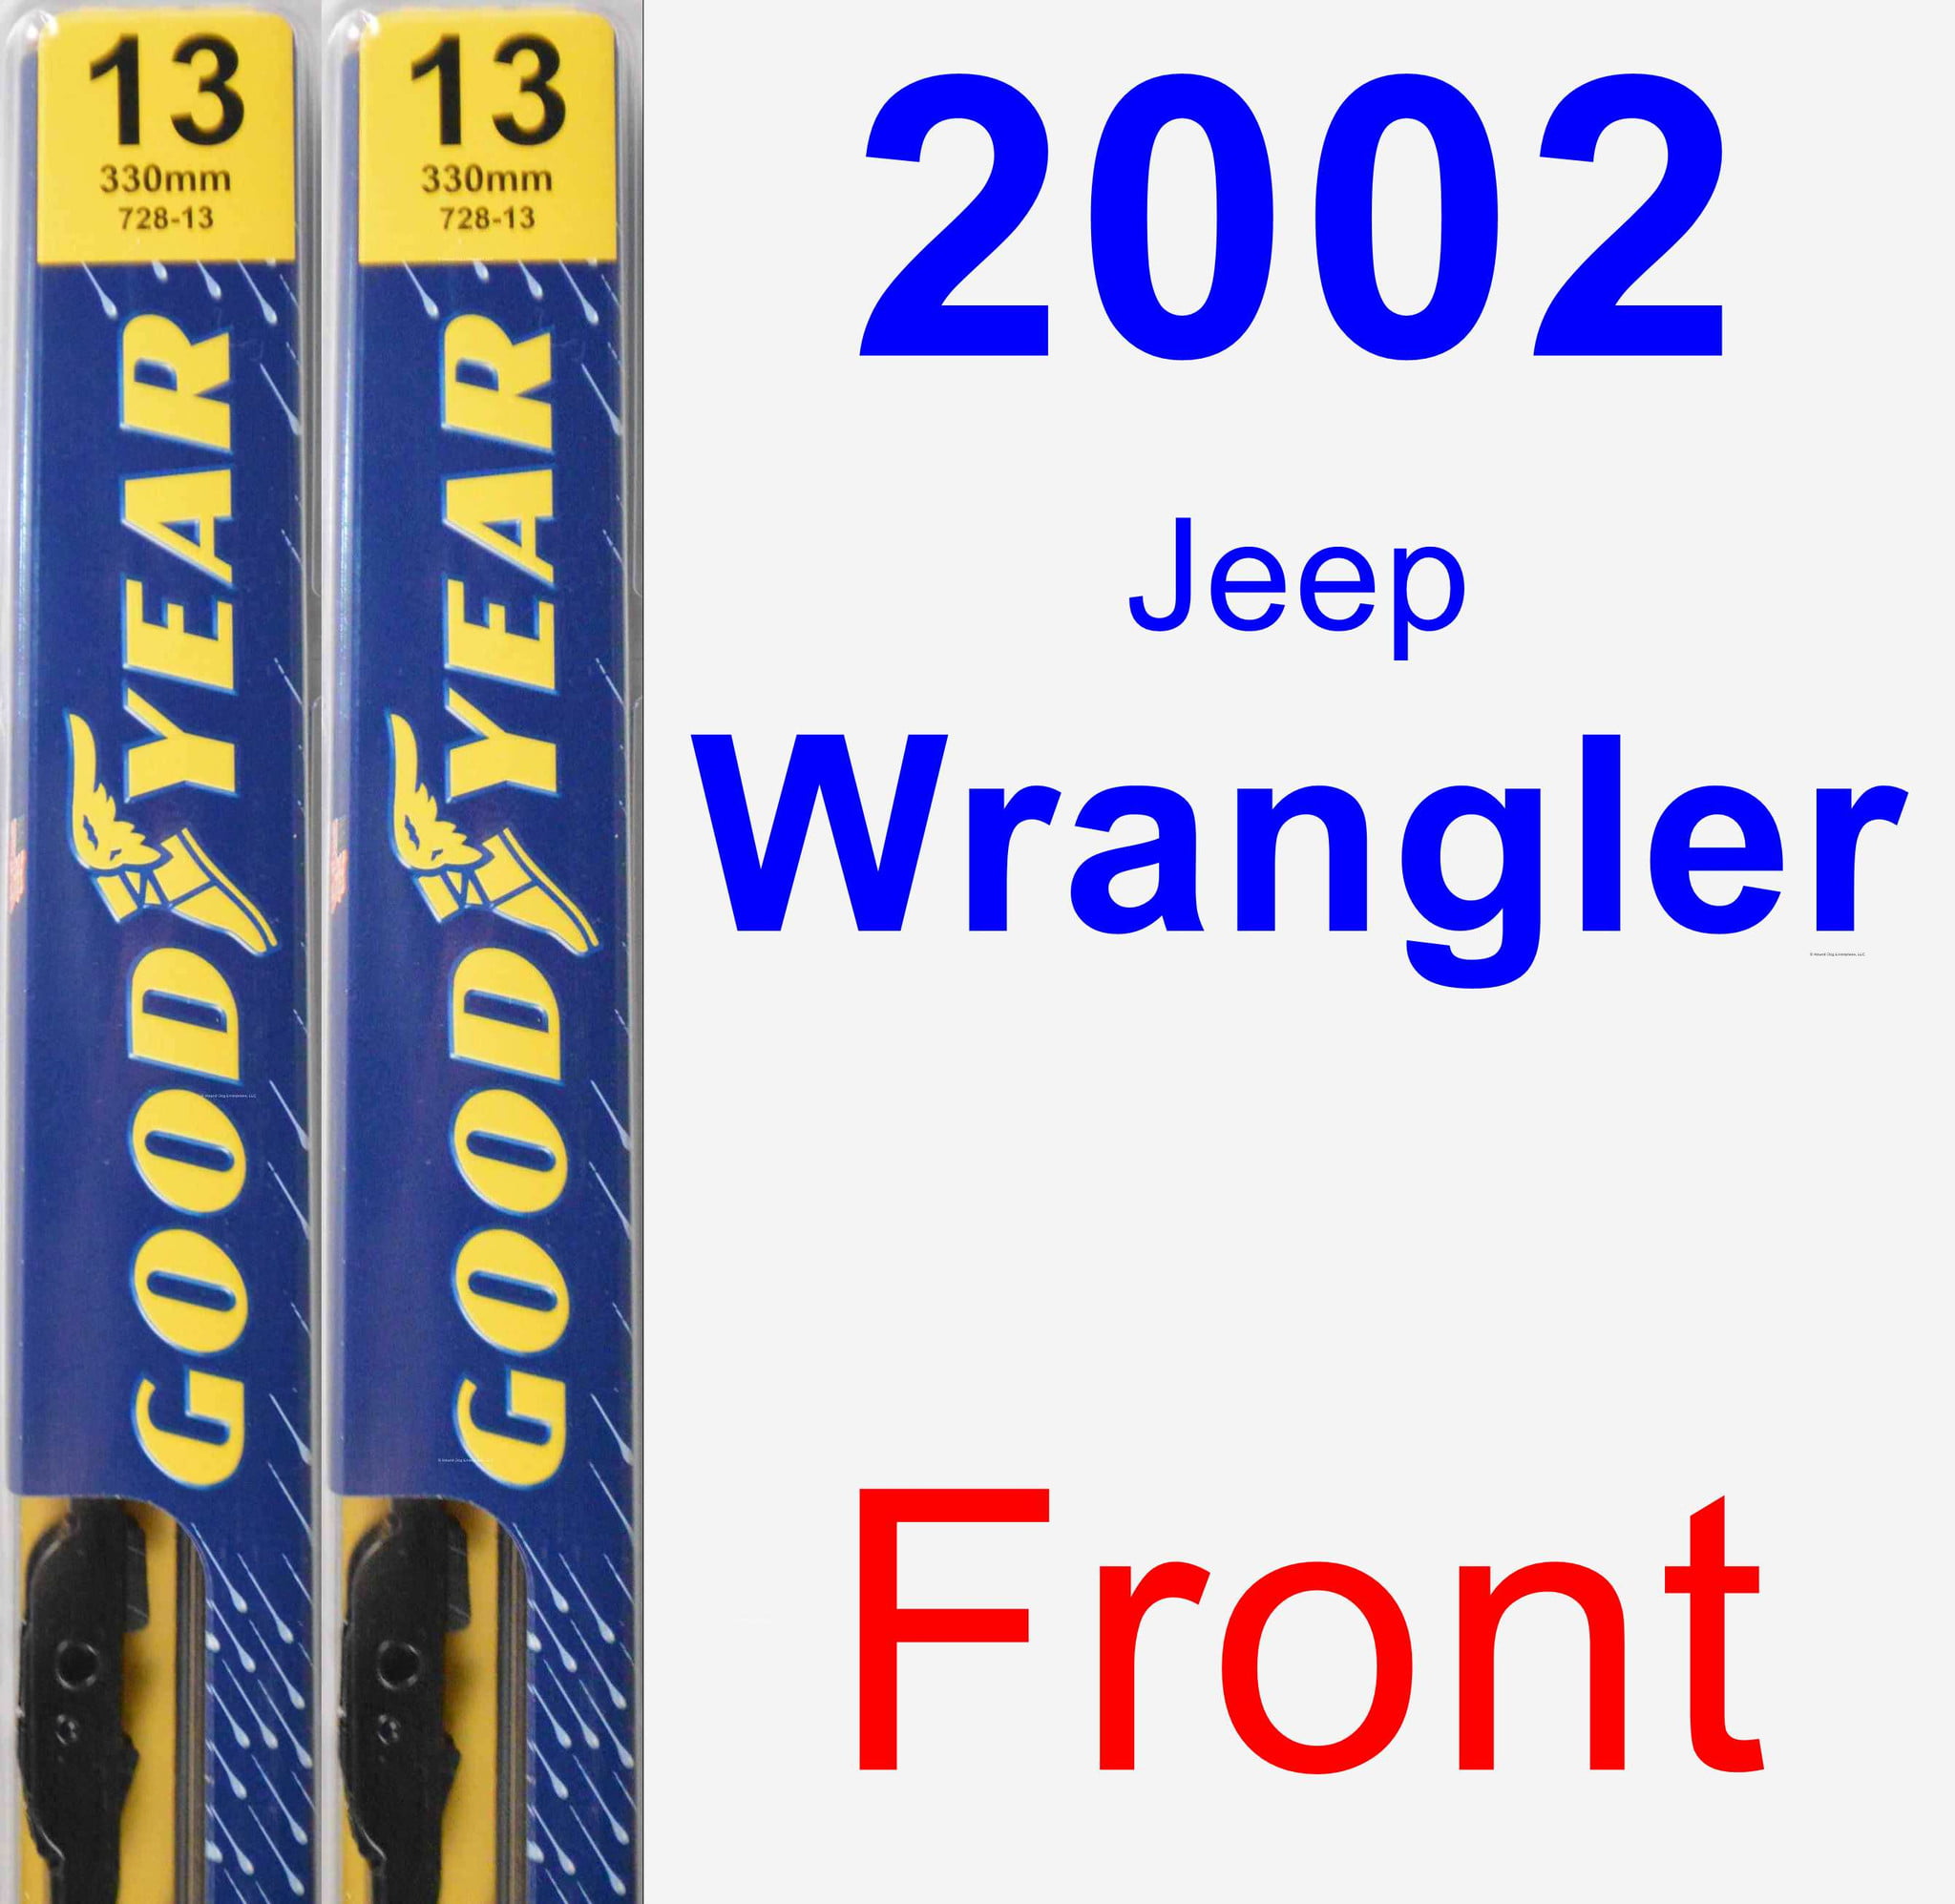 2002 Jeep Wrangler Rear Wiper Blade - Premium 